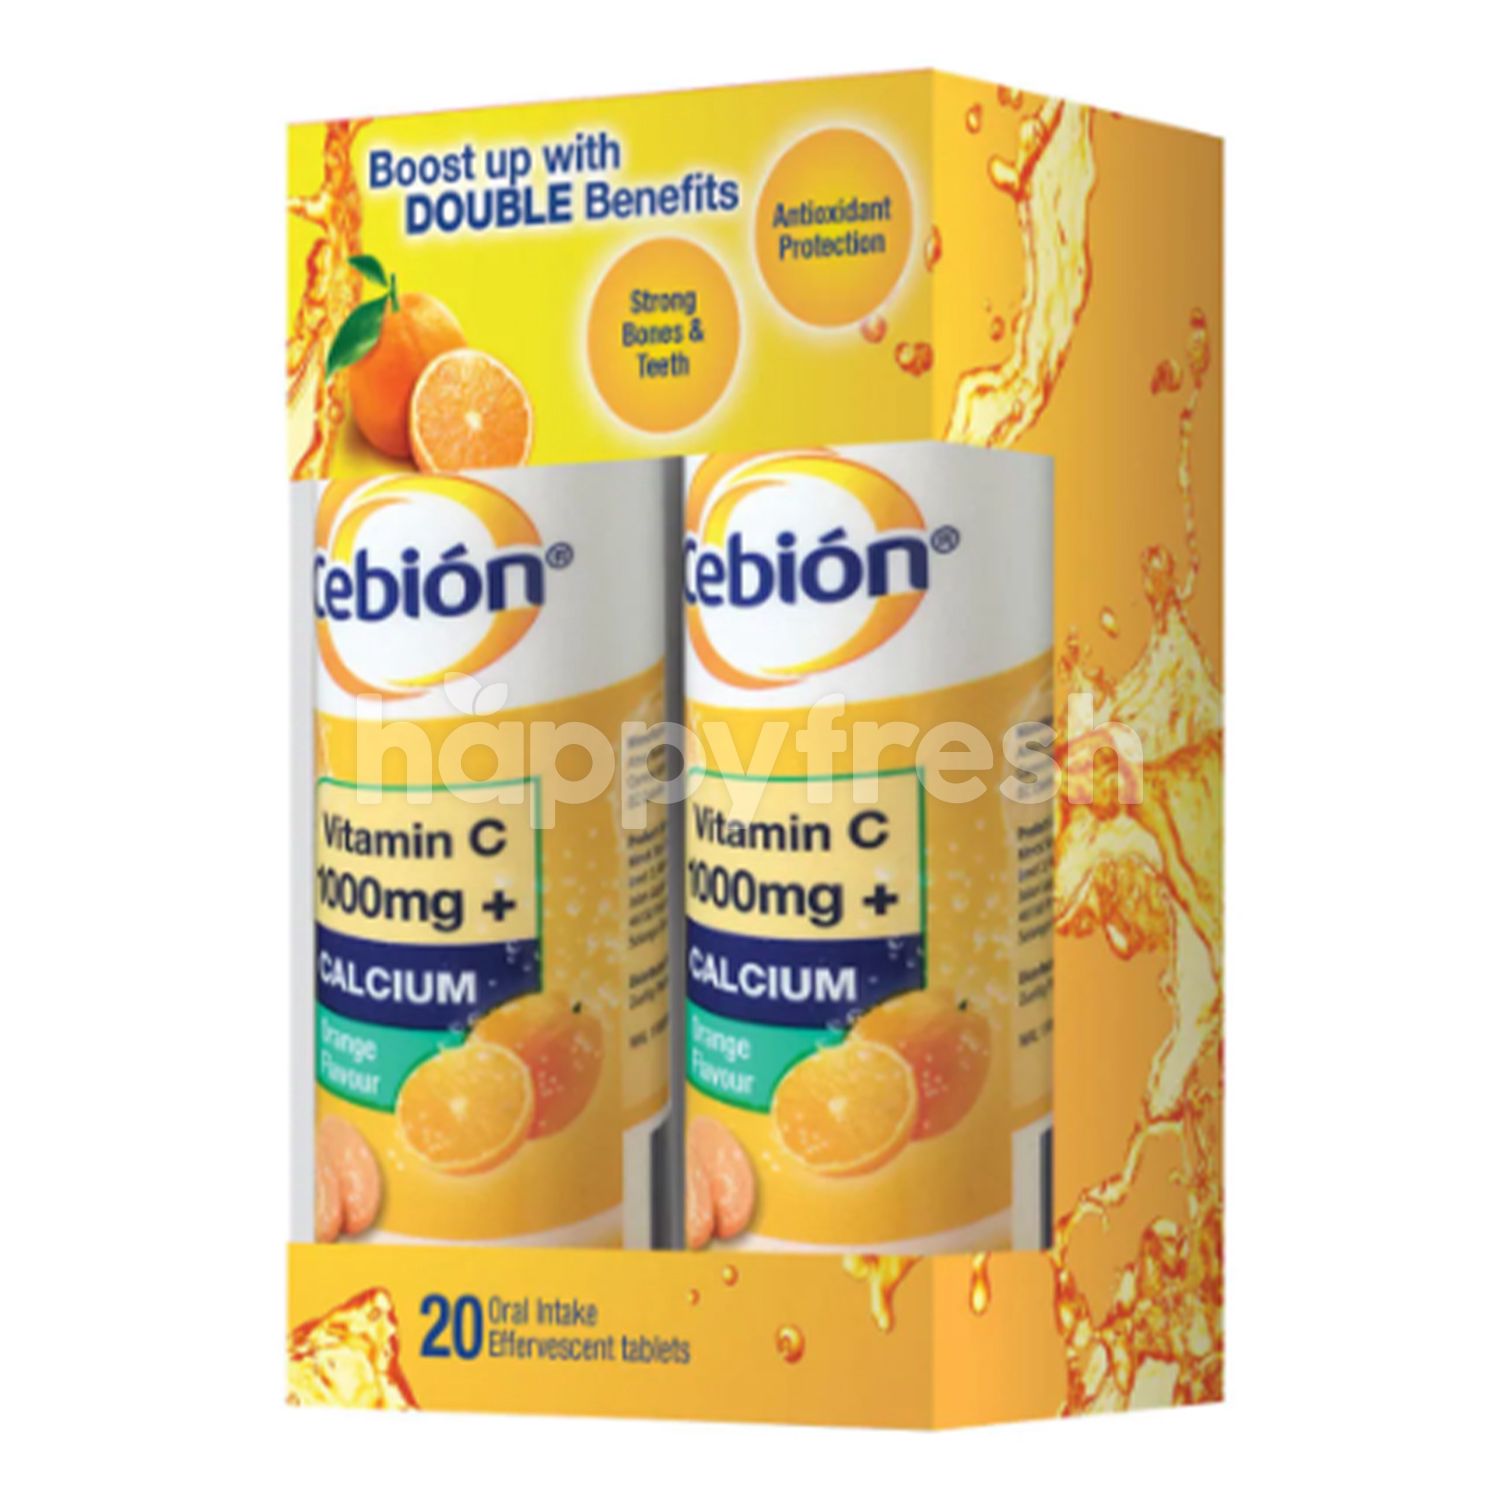 Buy Cebion Effervescent Vitamin C 1000mg Calcium 2 X 10 S At Watsons Happyfresh